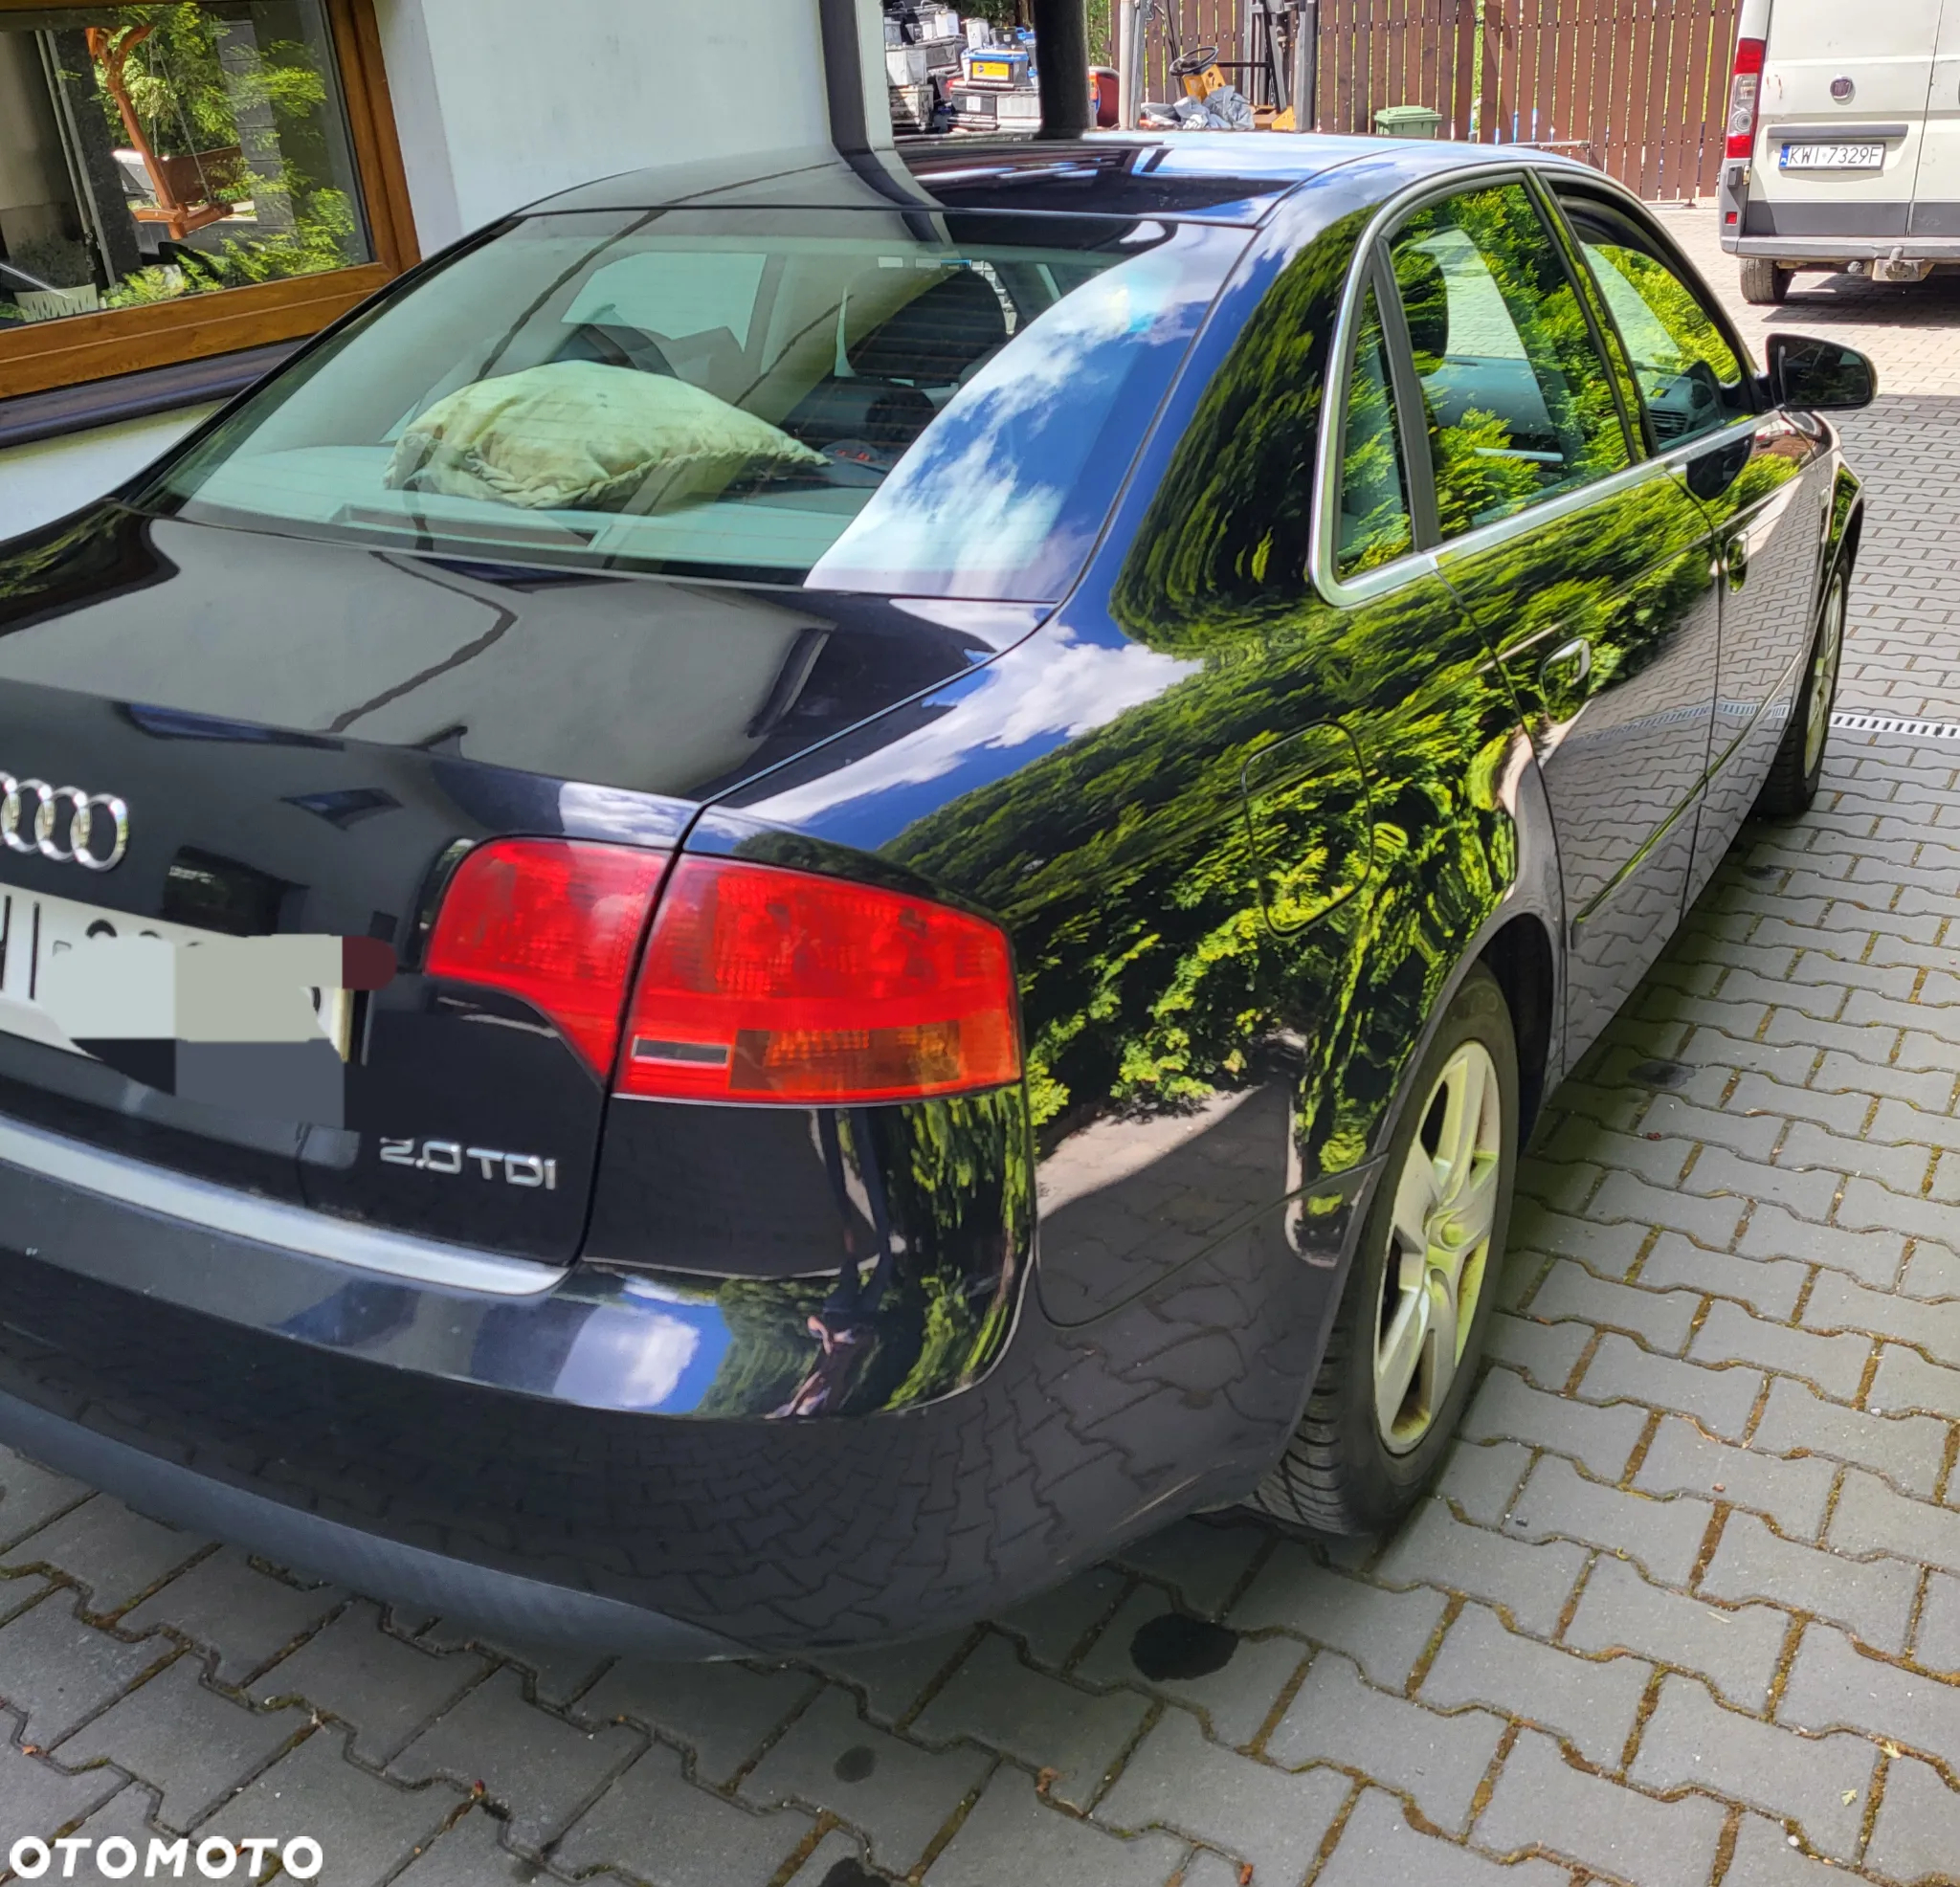 Audi A4 Avant 2.0 TDI Multitronic - 6